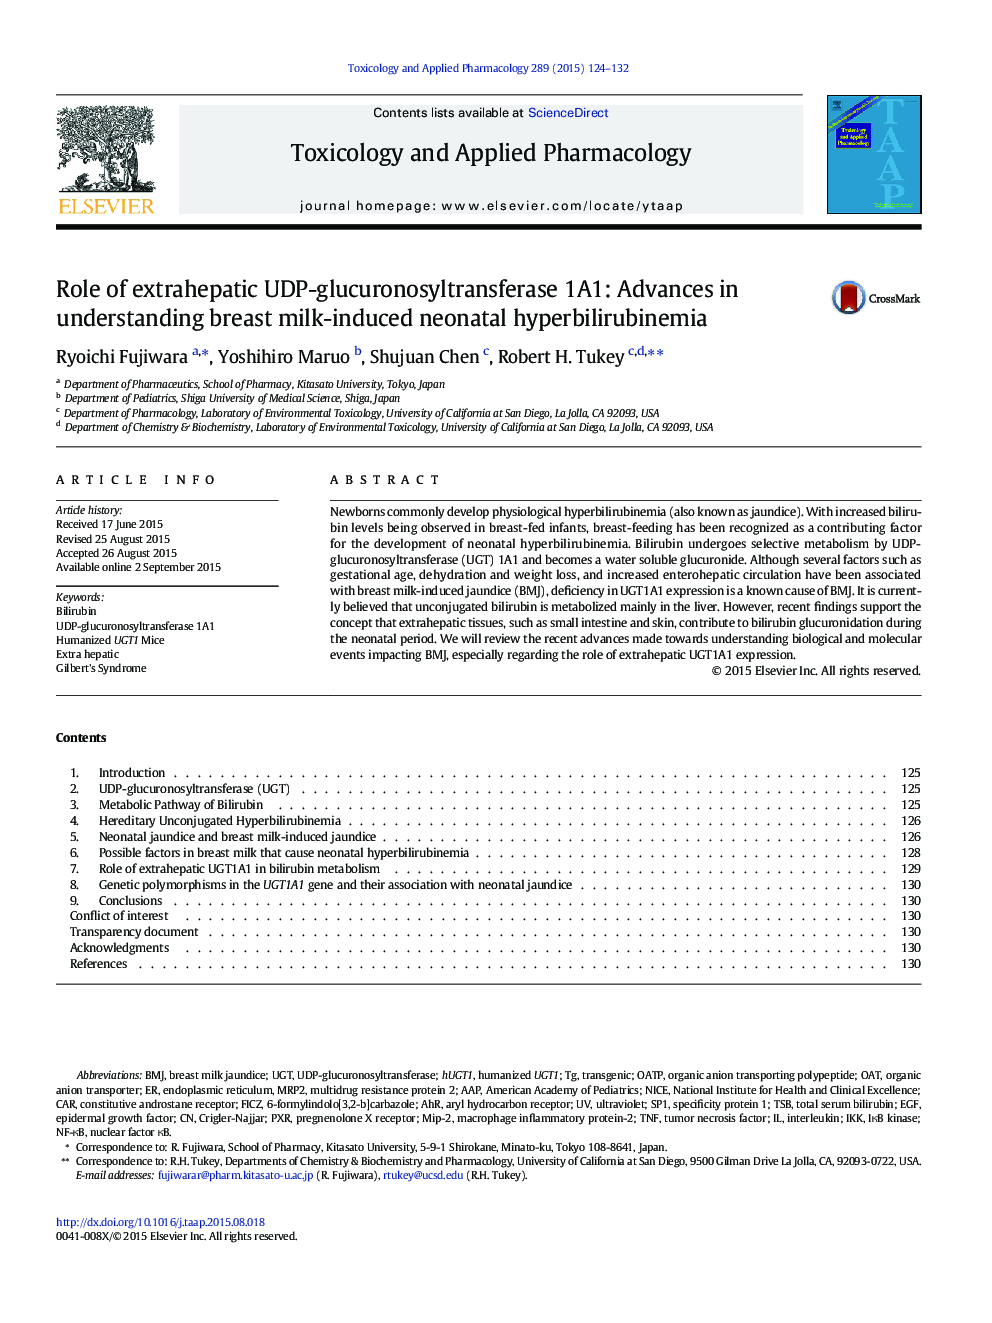 Role of extrahepatic UDP-glucuronosyltransferase 1A1: Advances in understanding breast milk-induced neonatal hyperbilirubinemia